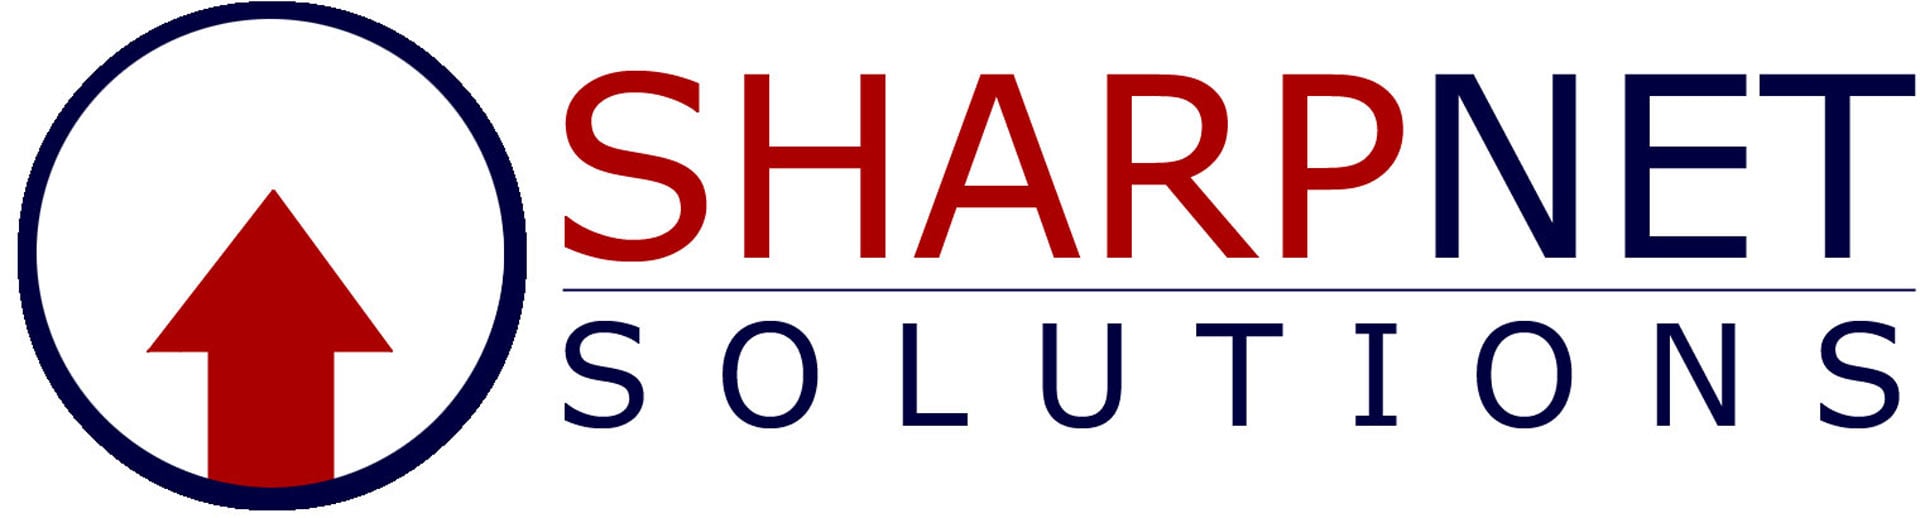 Top Local Online Marketing Company Logo: SharpNet